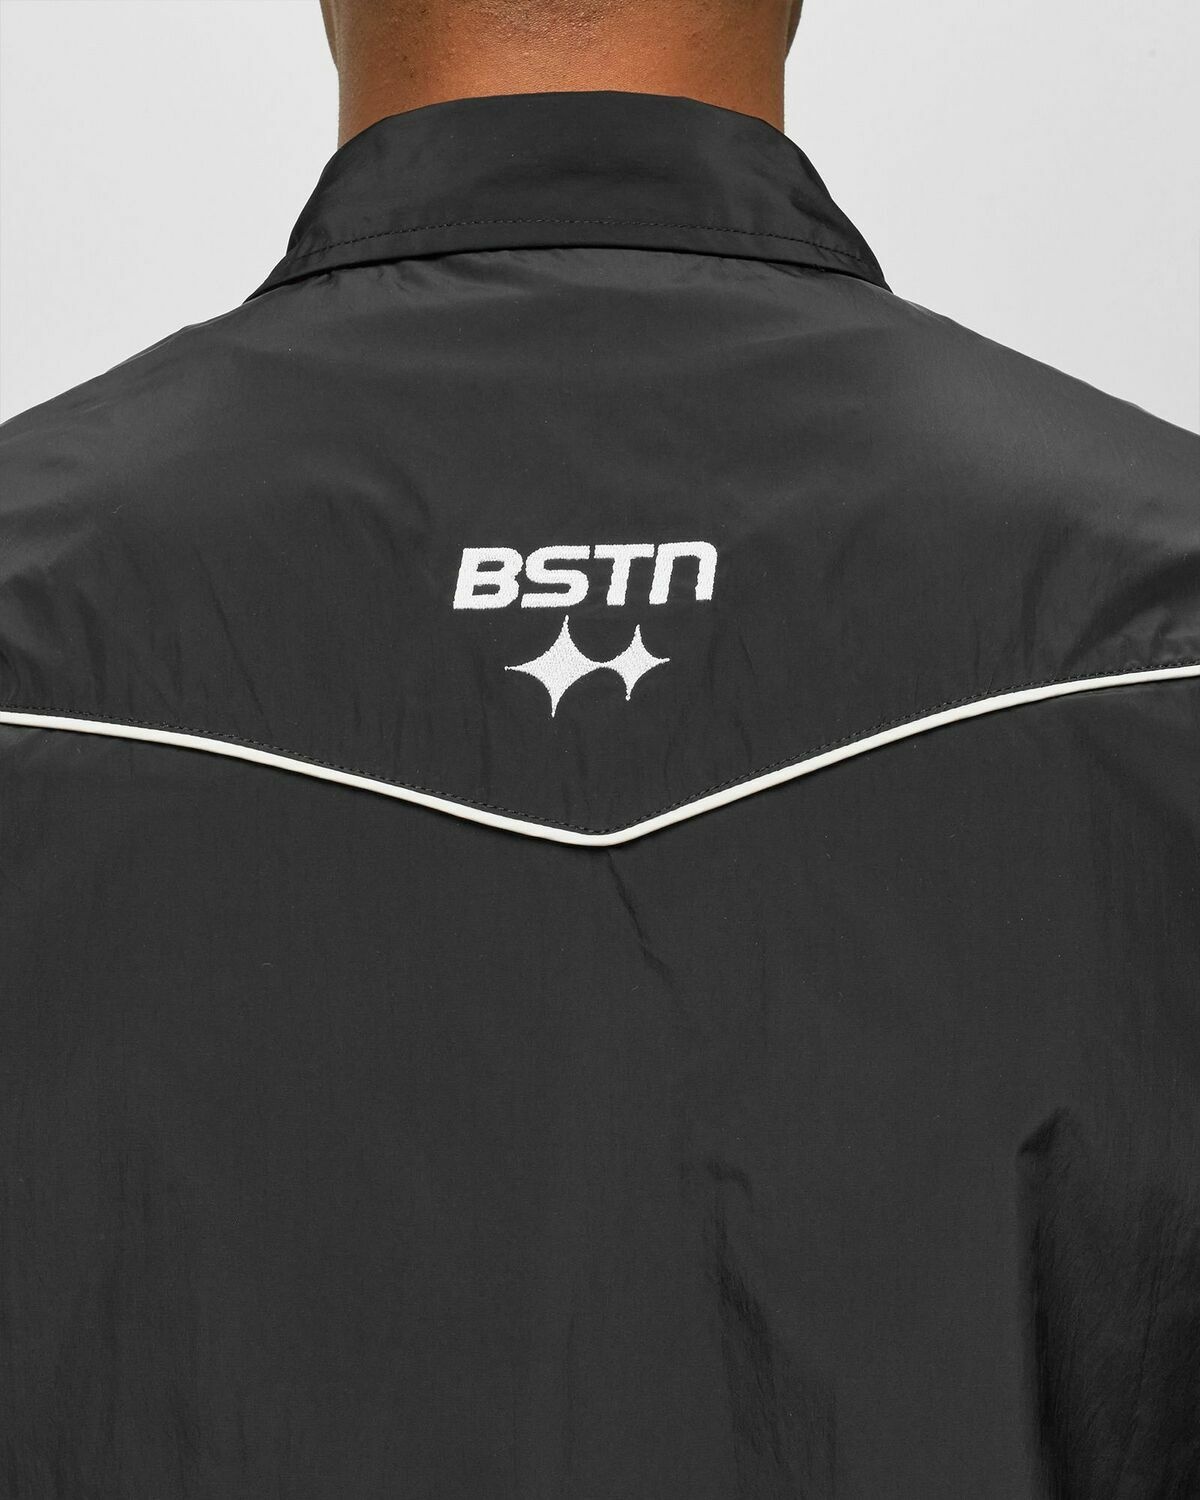 Bstn Brand Western Lighweight Shirt Black - Mens - Overshirts/Shirts & Blouses